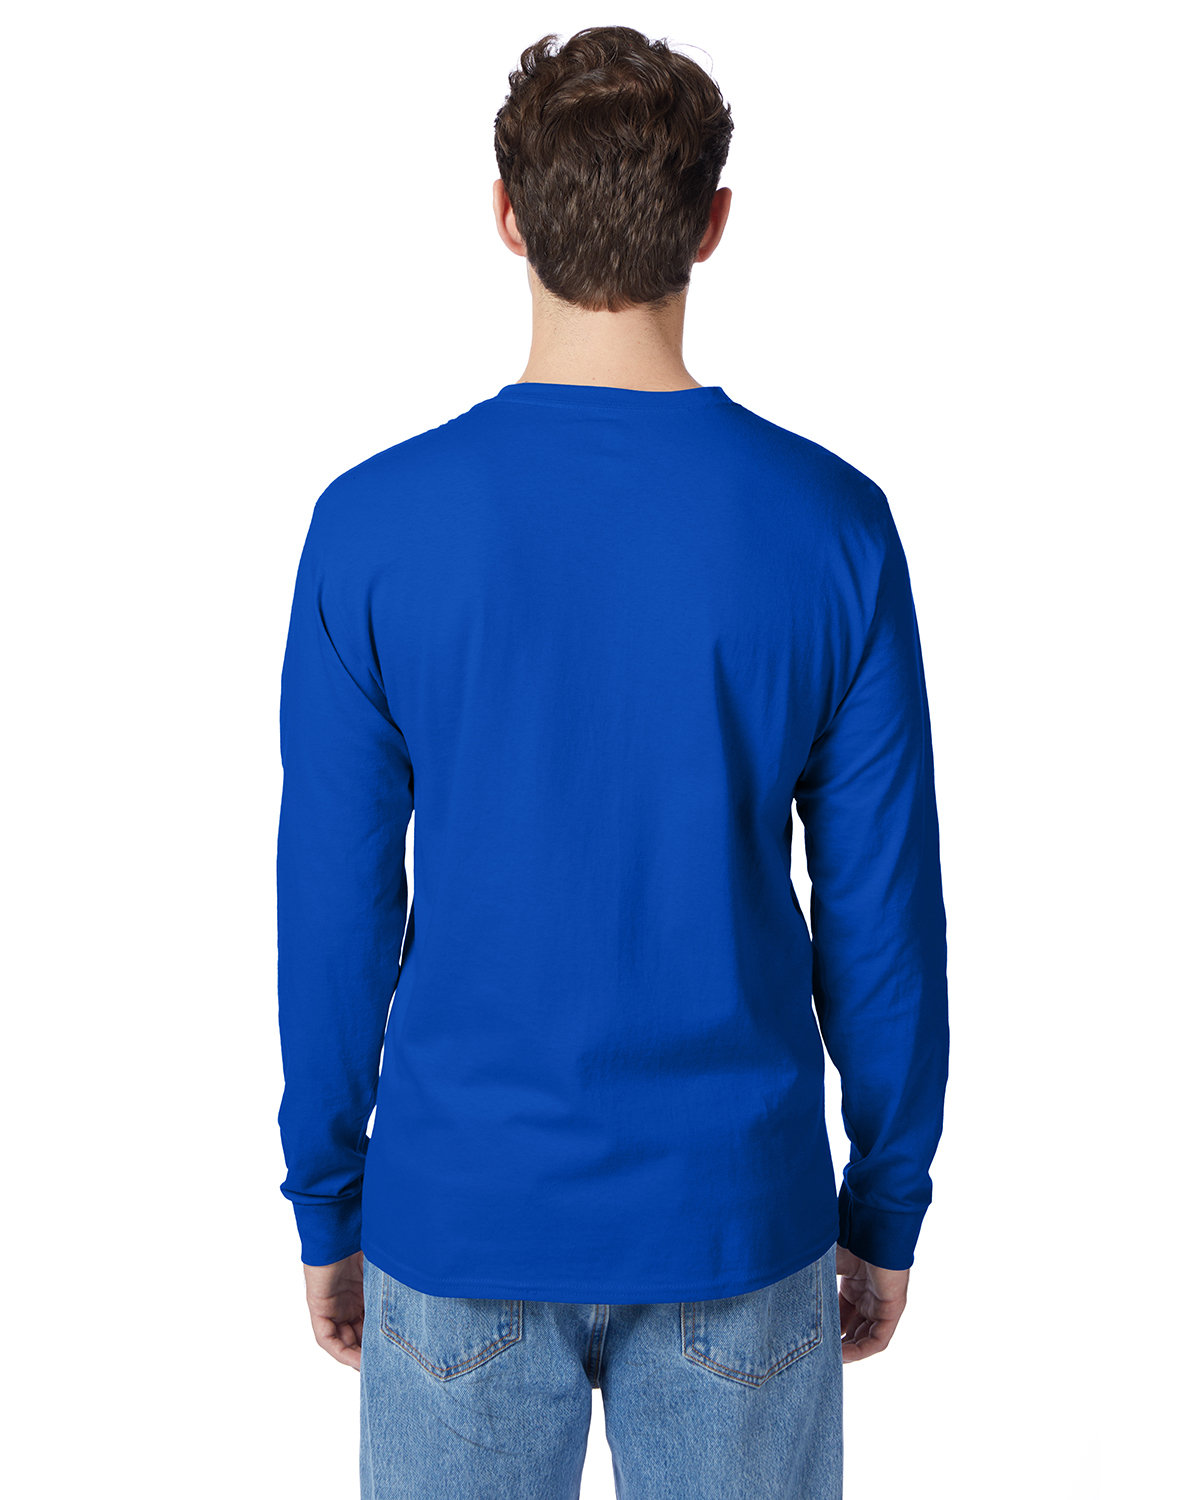 Hanes Men's Long-Sleeve Pocket T-Shirt Tee S-3XL 5596 | eBay